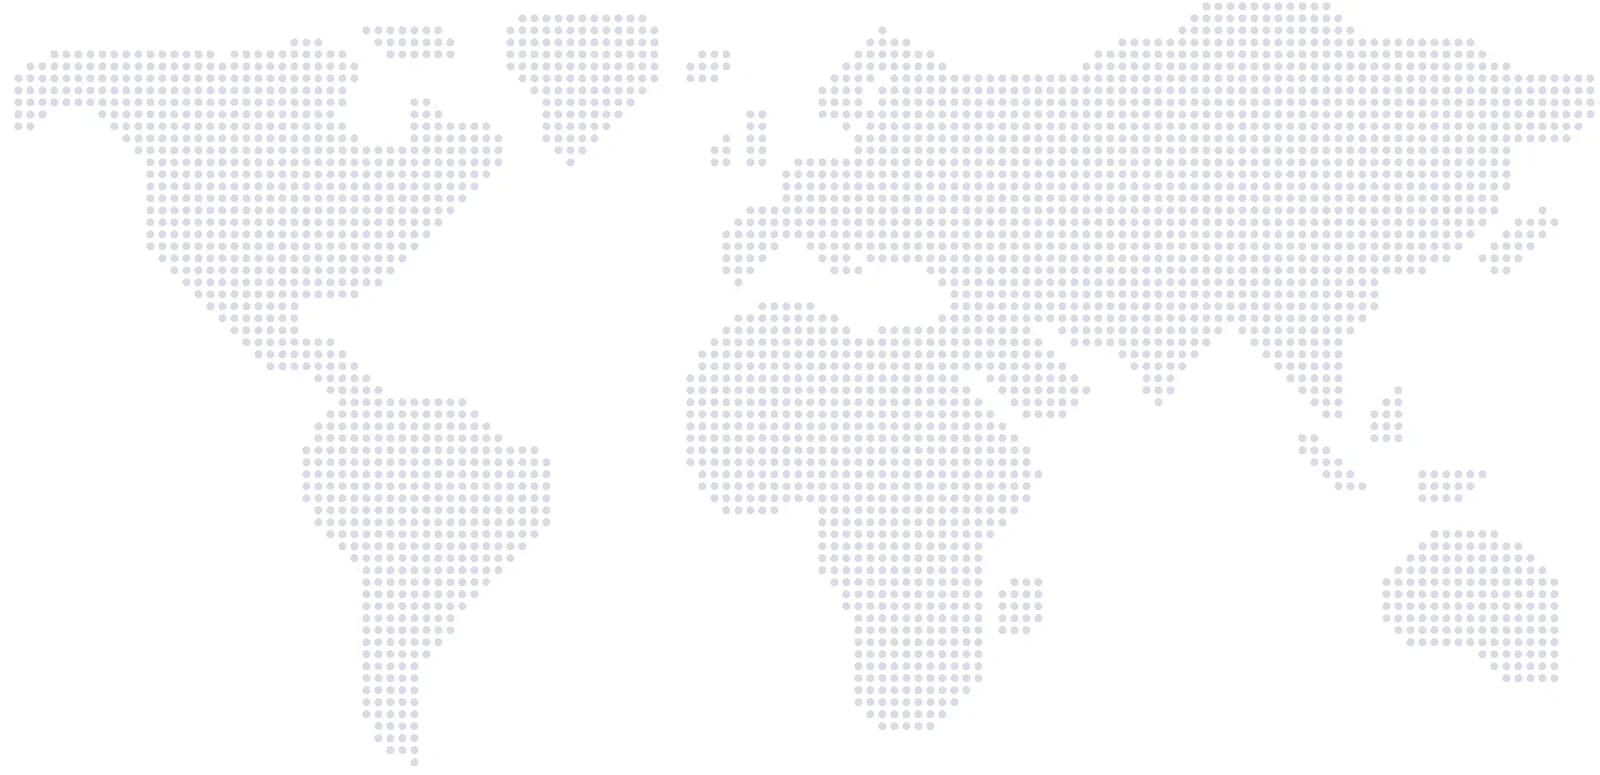 Global CDN Map